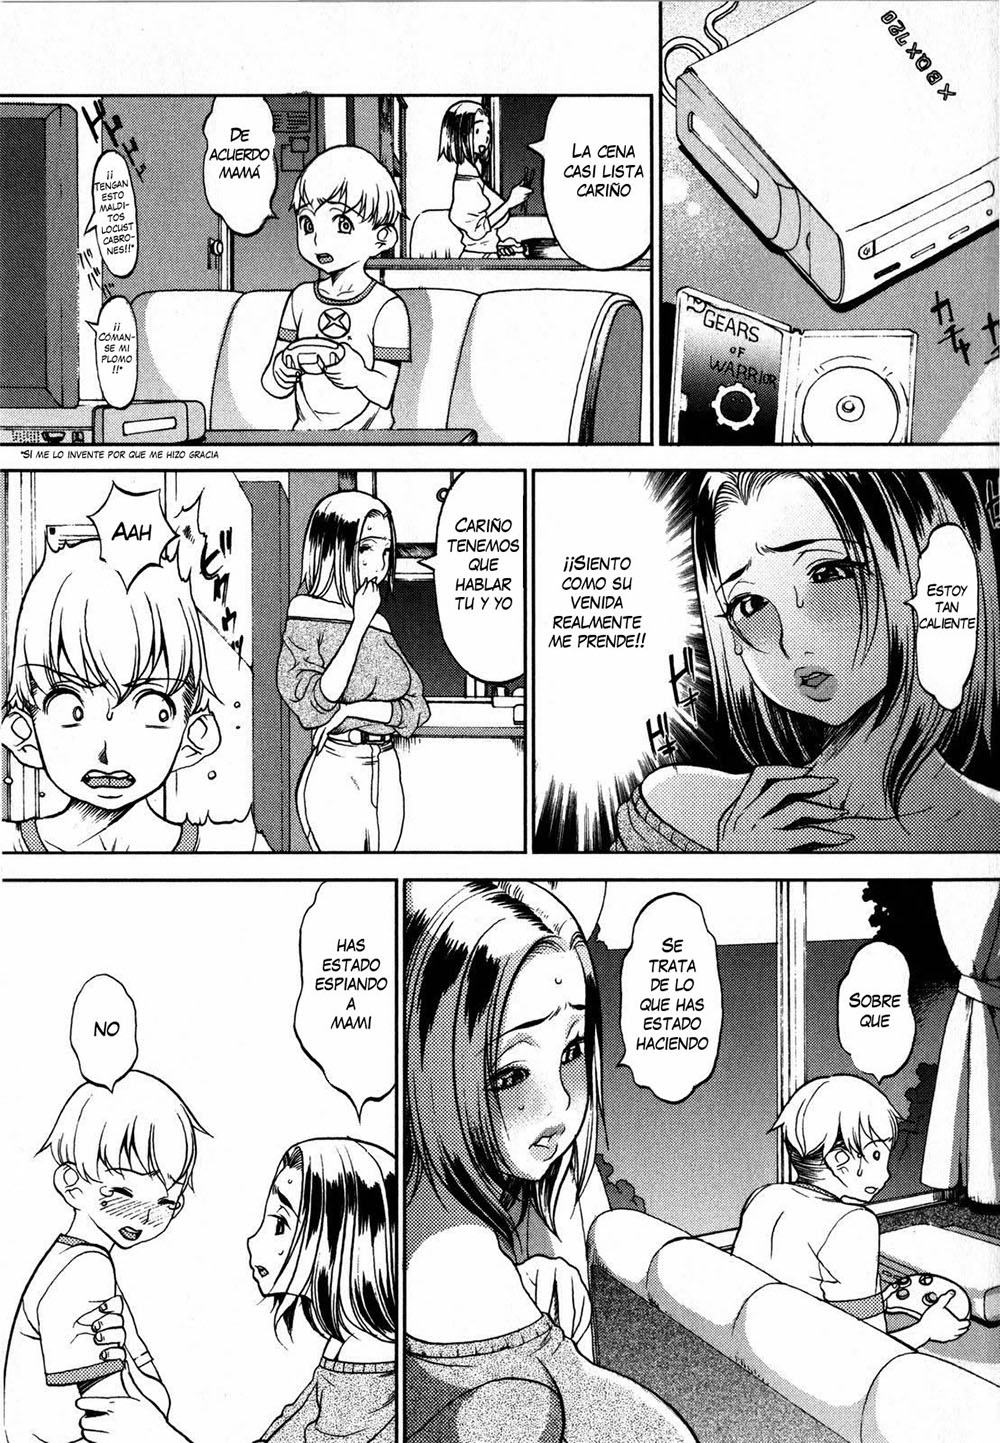 La Mirada Furtiva de mi Hijo - 5 - Comics Porno - Hentai Manga - Cartoon XXX